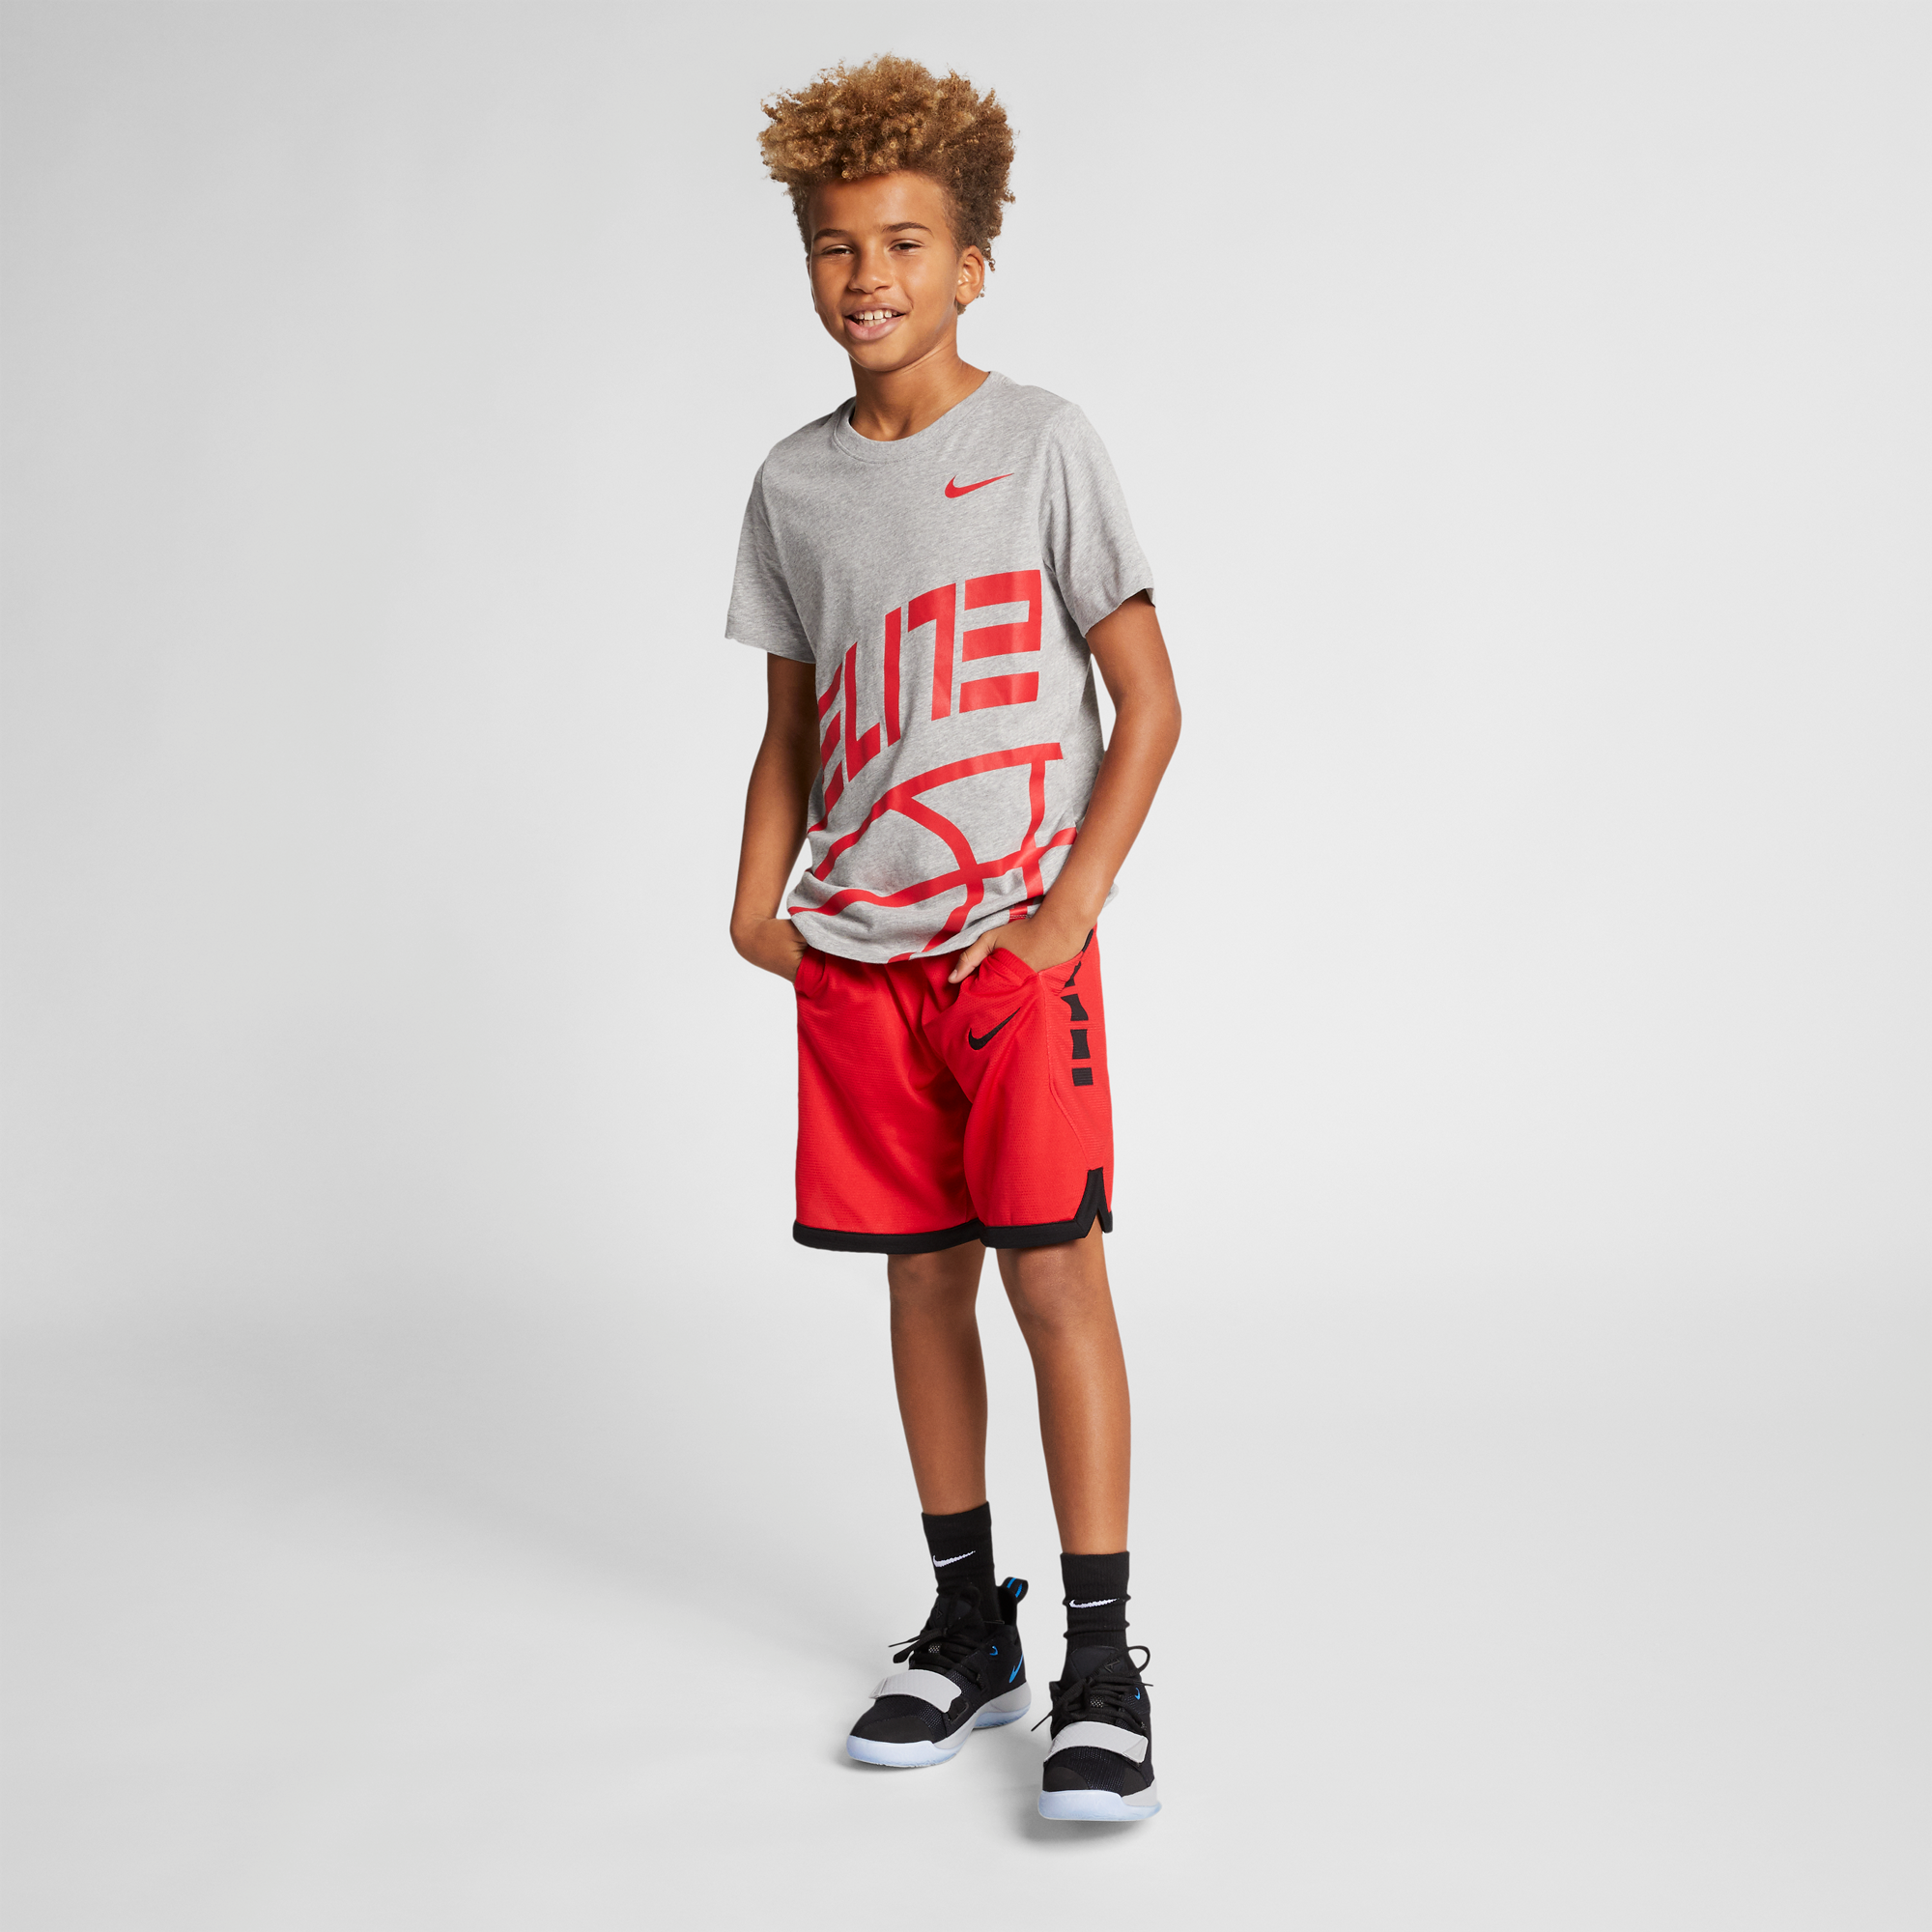 Nike Kids Basketball Shorts Hot Sale, 58% OFF | www.ingeniovirtual.com